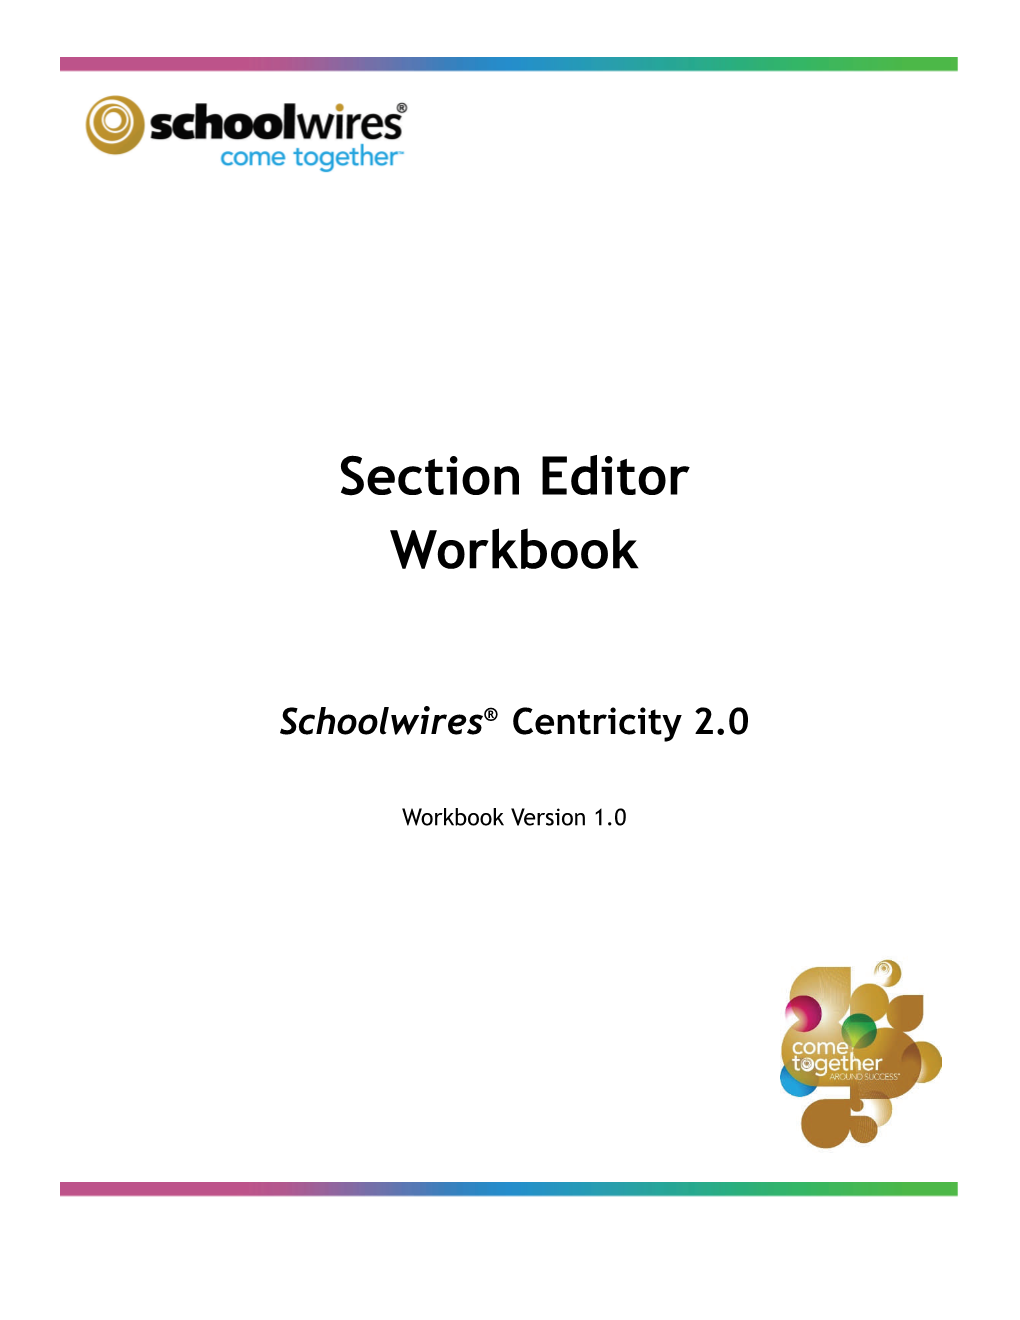 Section Editor Workbook